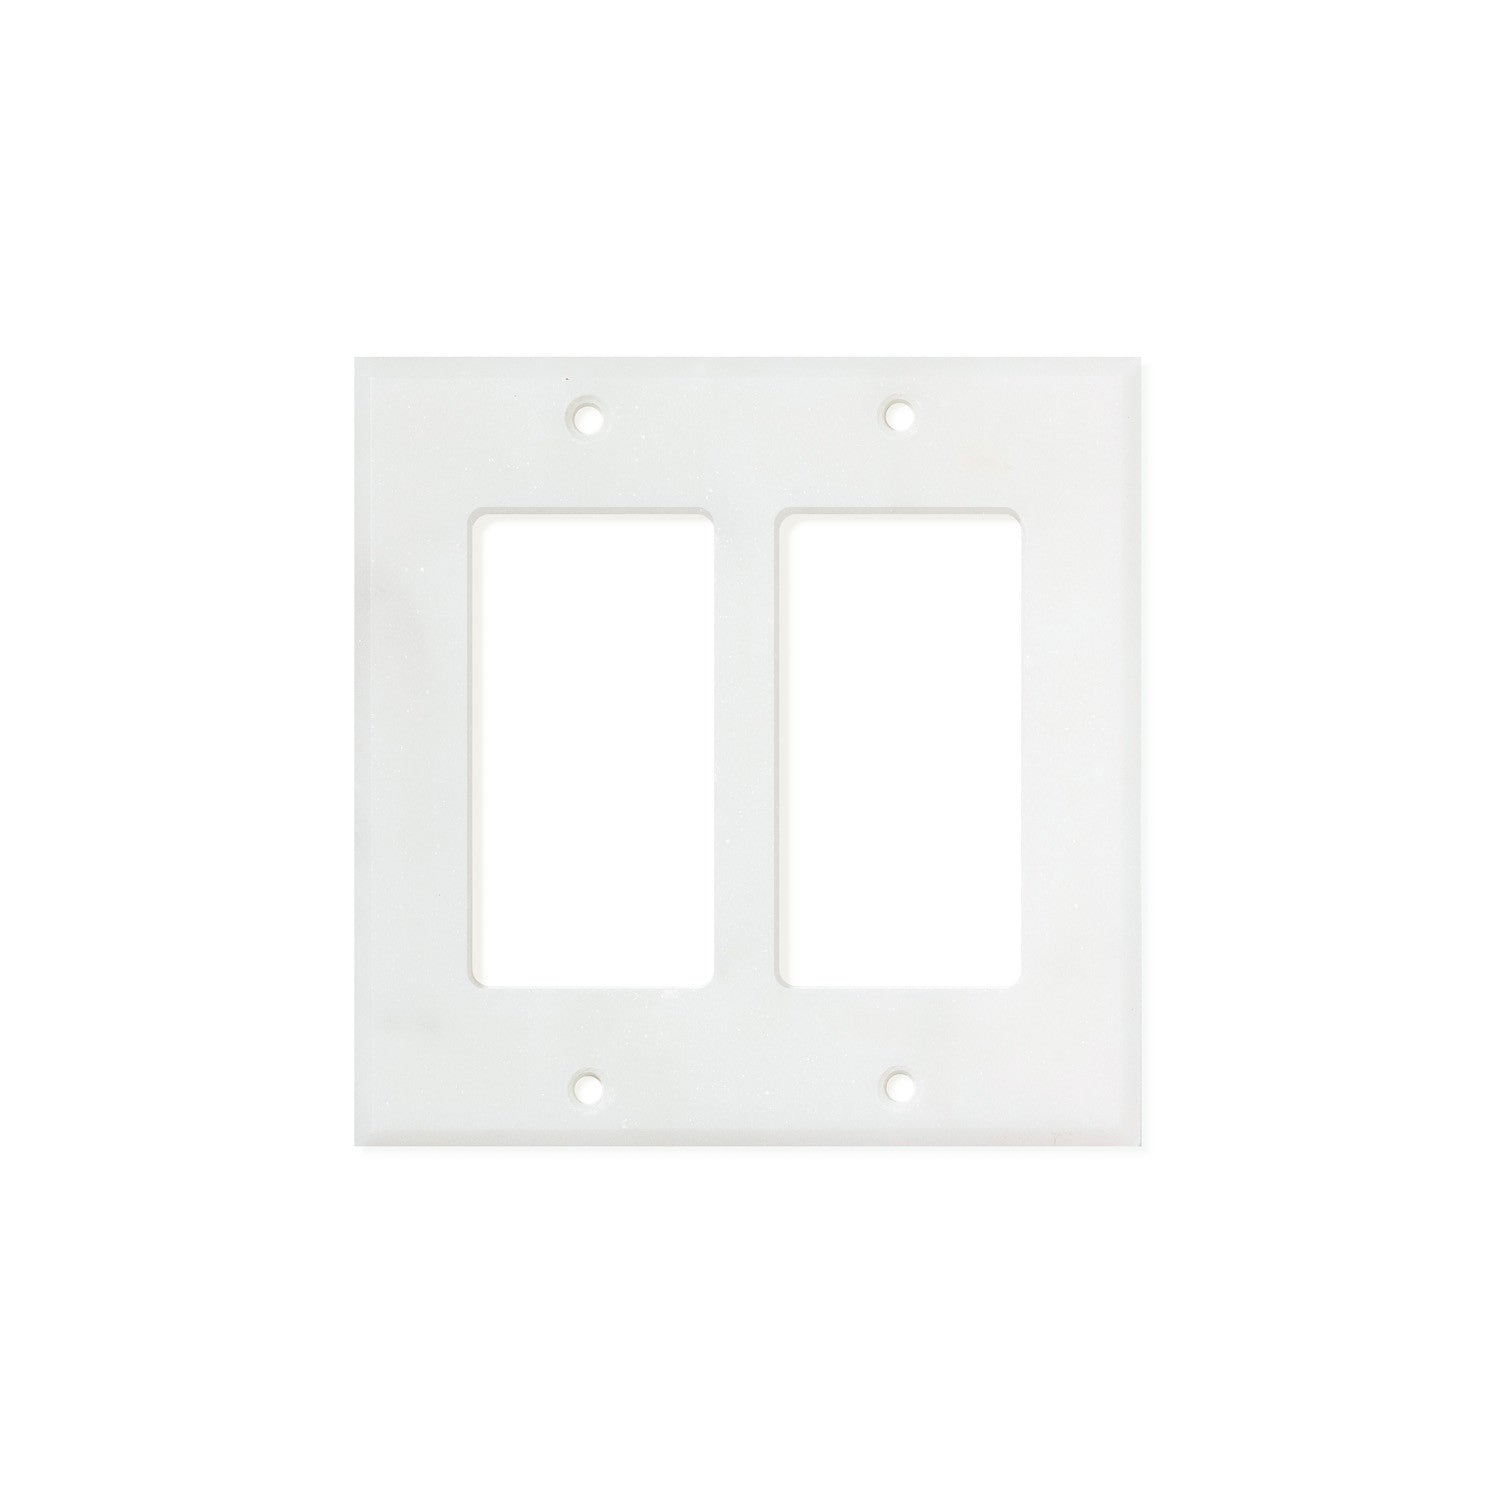 Bianco Carrara (Carrara White) Marble Switch Plate Cover, Polished (2 ROCKER) - Tilephile